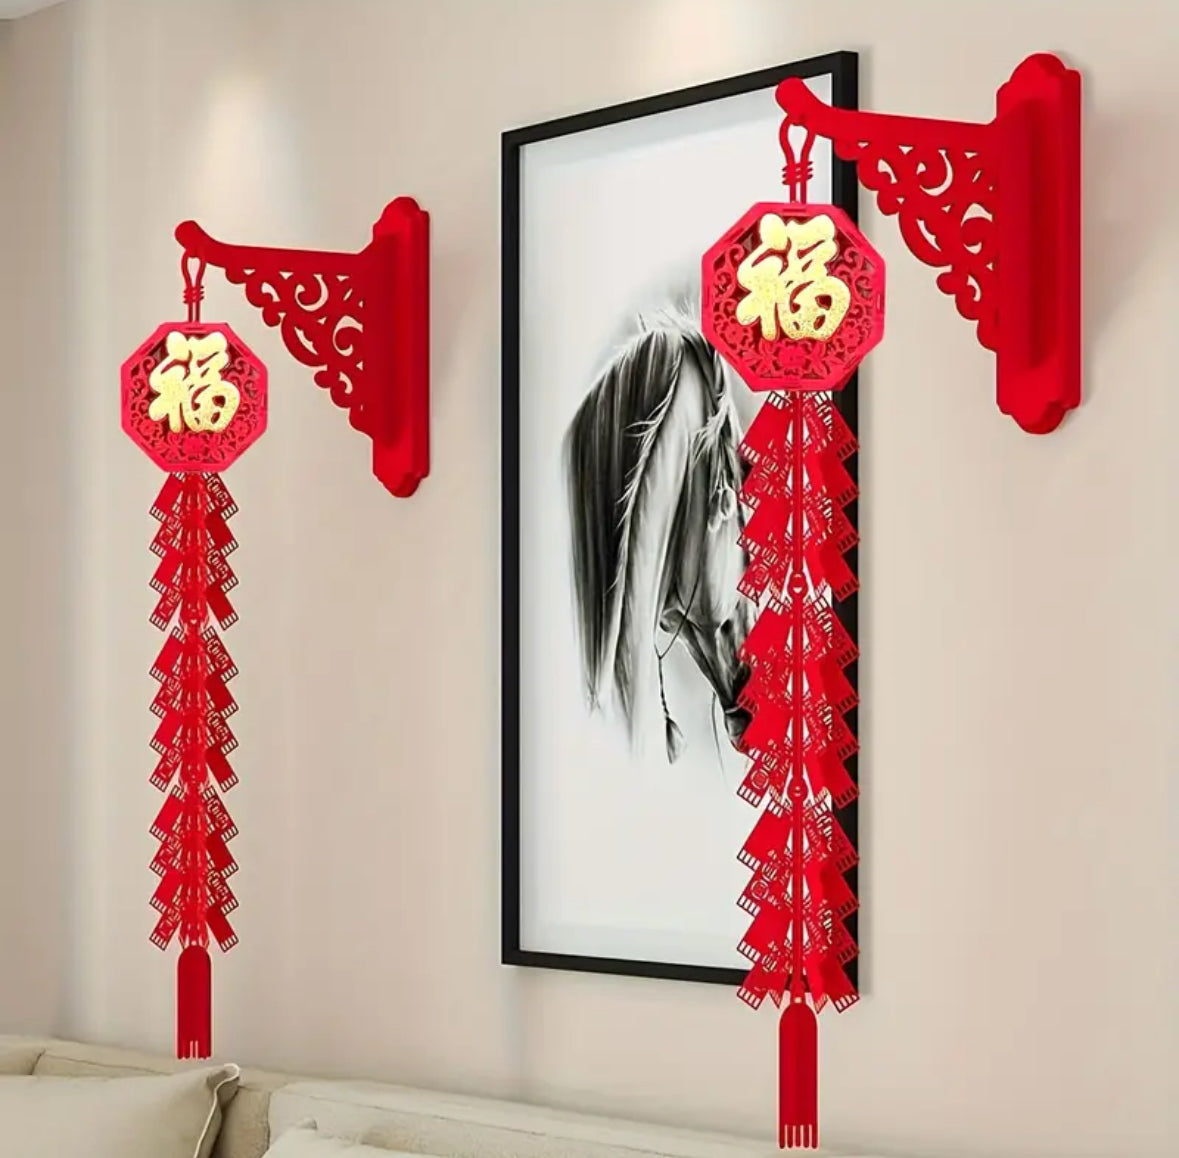 Firecracker Decoration Pendant, Indoor New Year Hanging Decoration